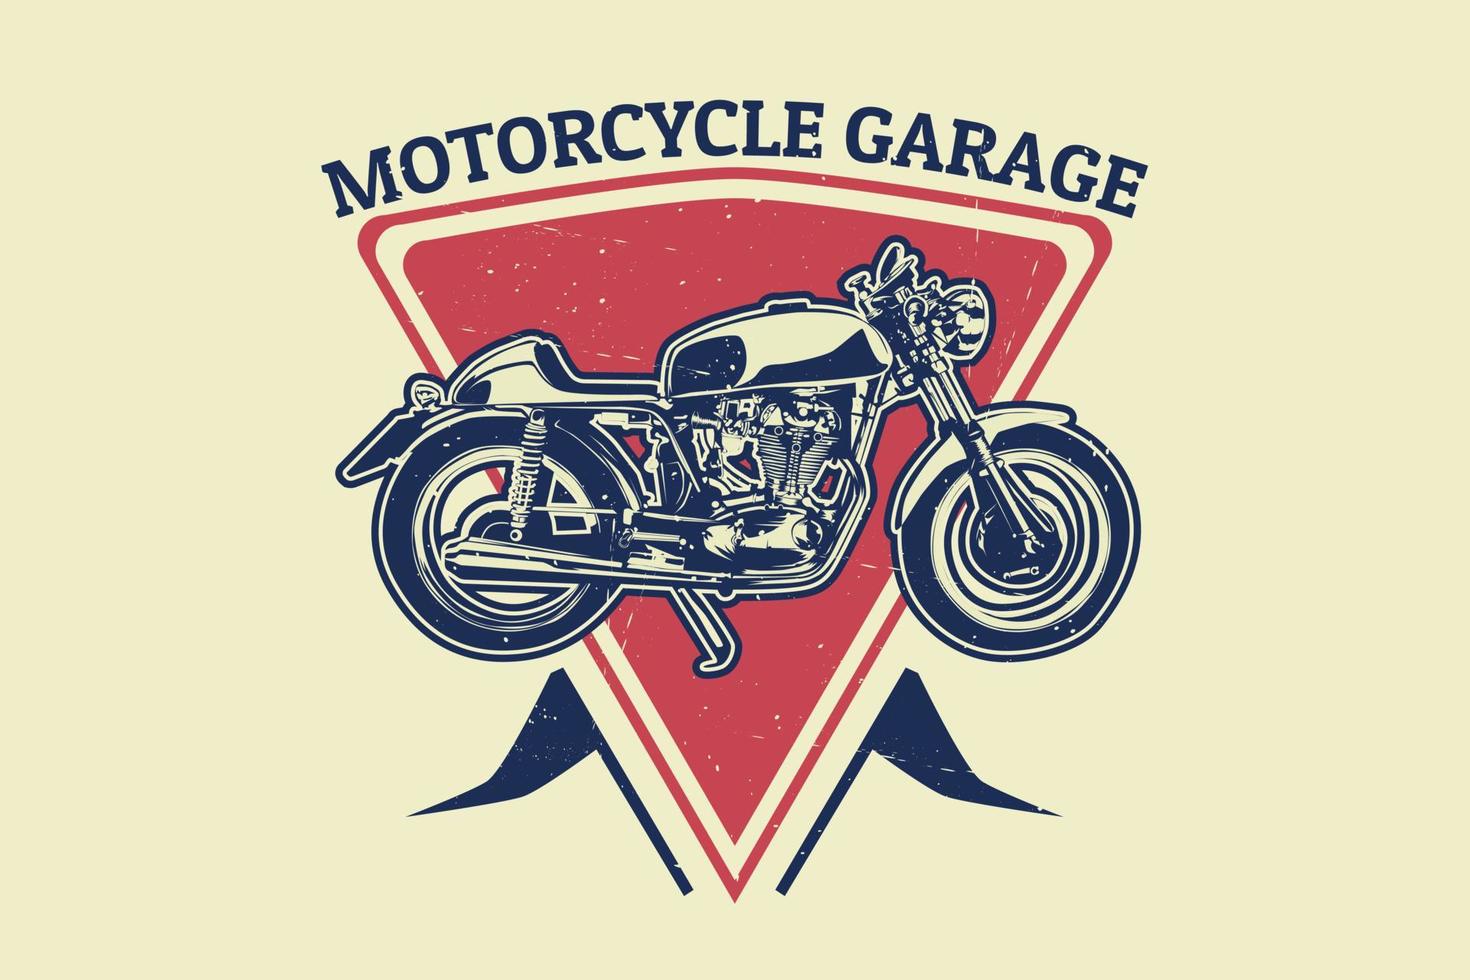 Motorcycle garage silhouette design vector